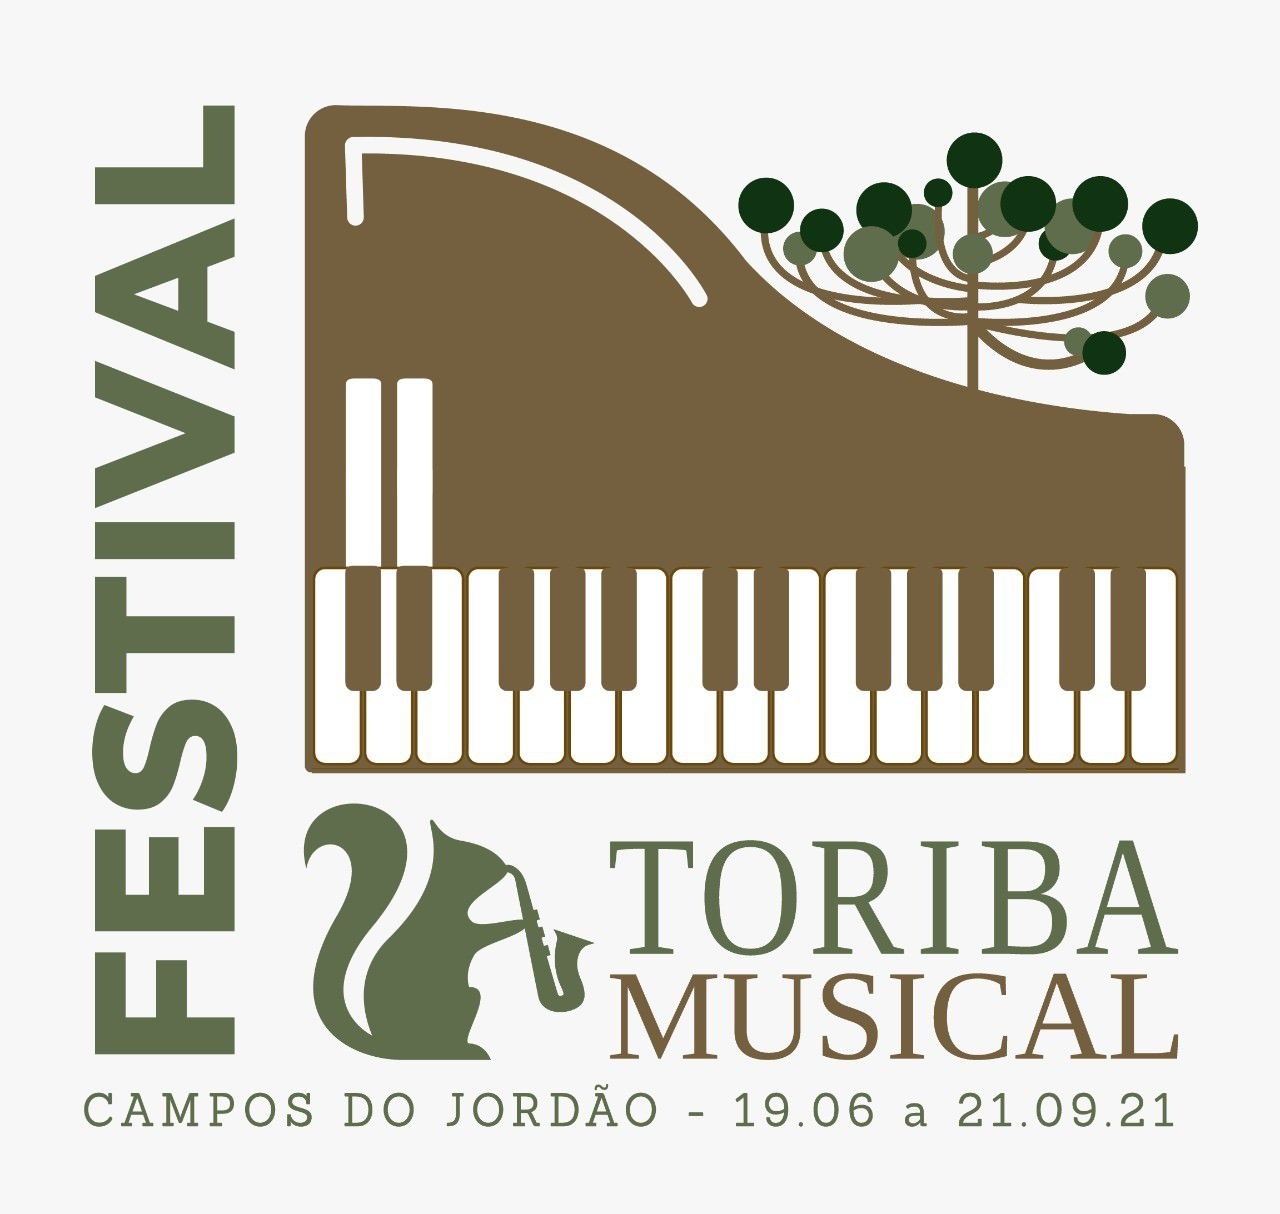 Festival Toriba Musical 2021, soon. Disclosure.